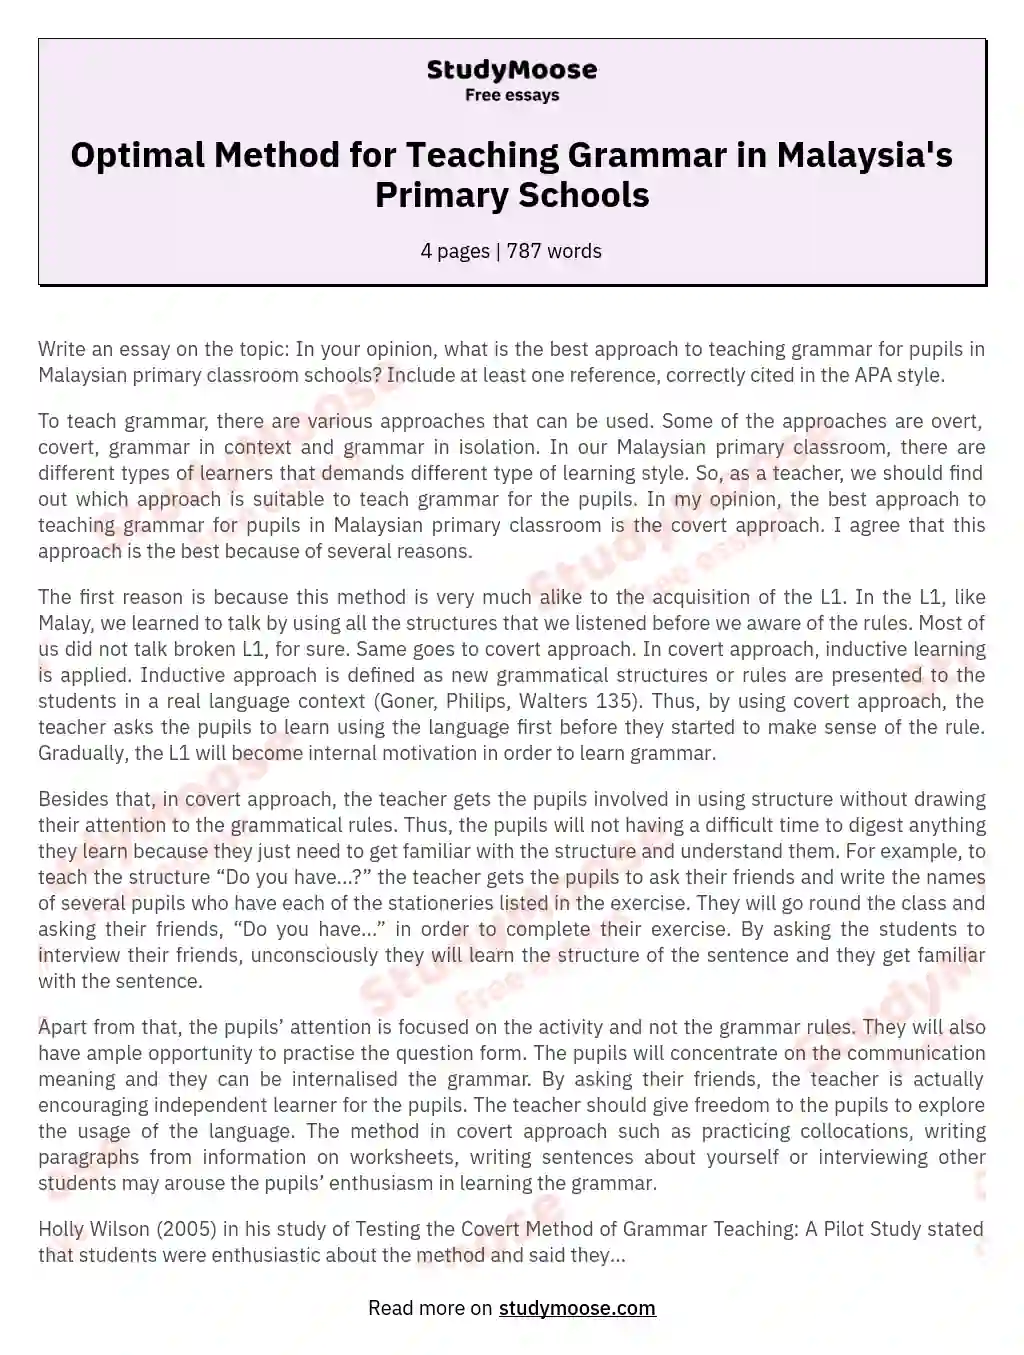 Optimal Method for Teaching Grammar in Malaysia's Primary Schools essay